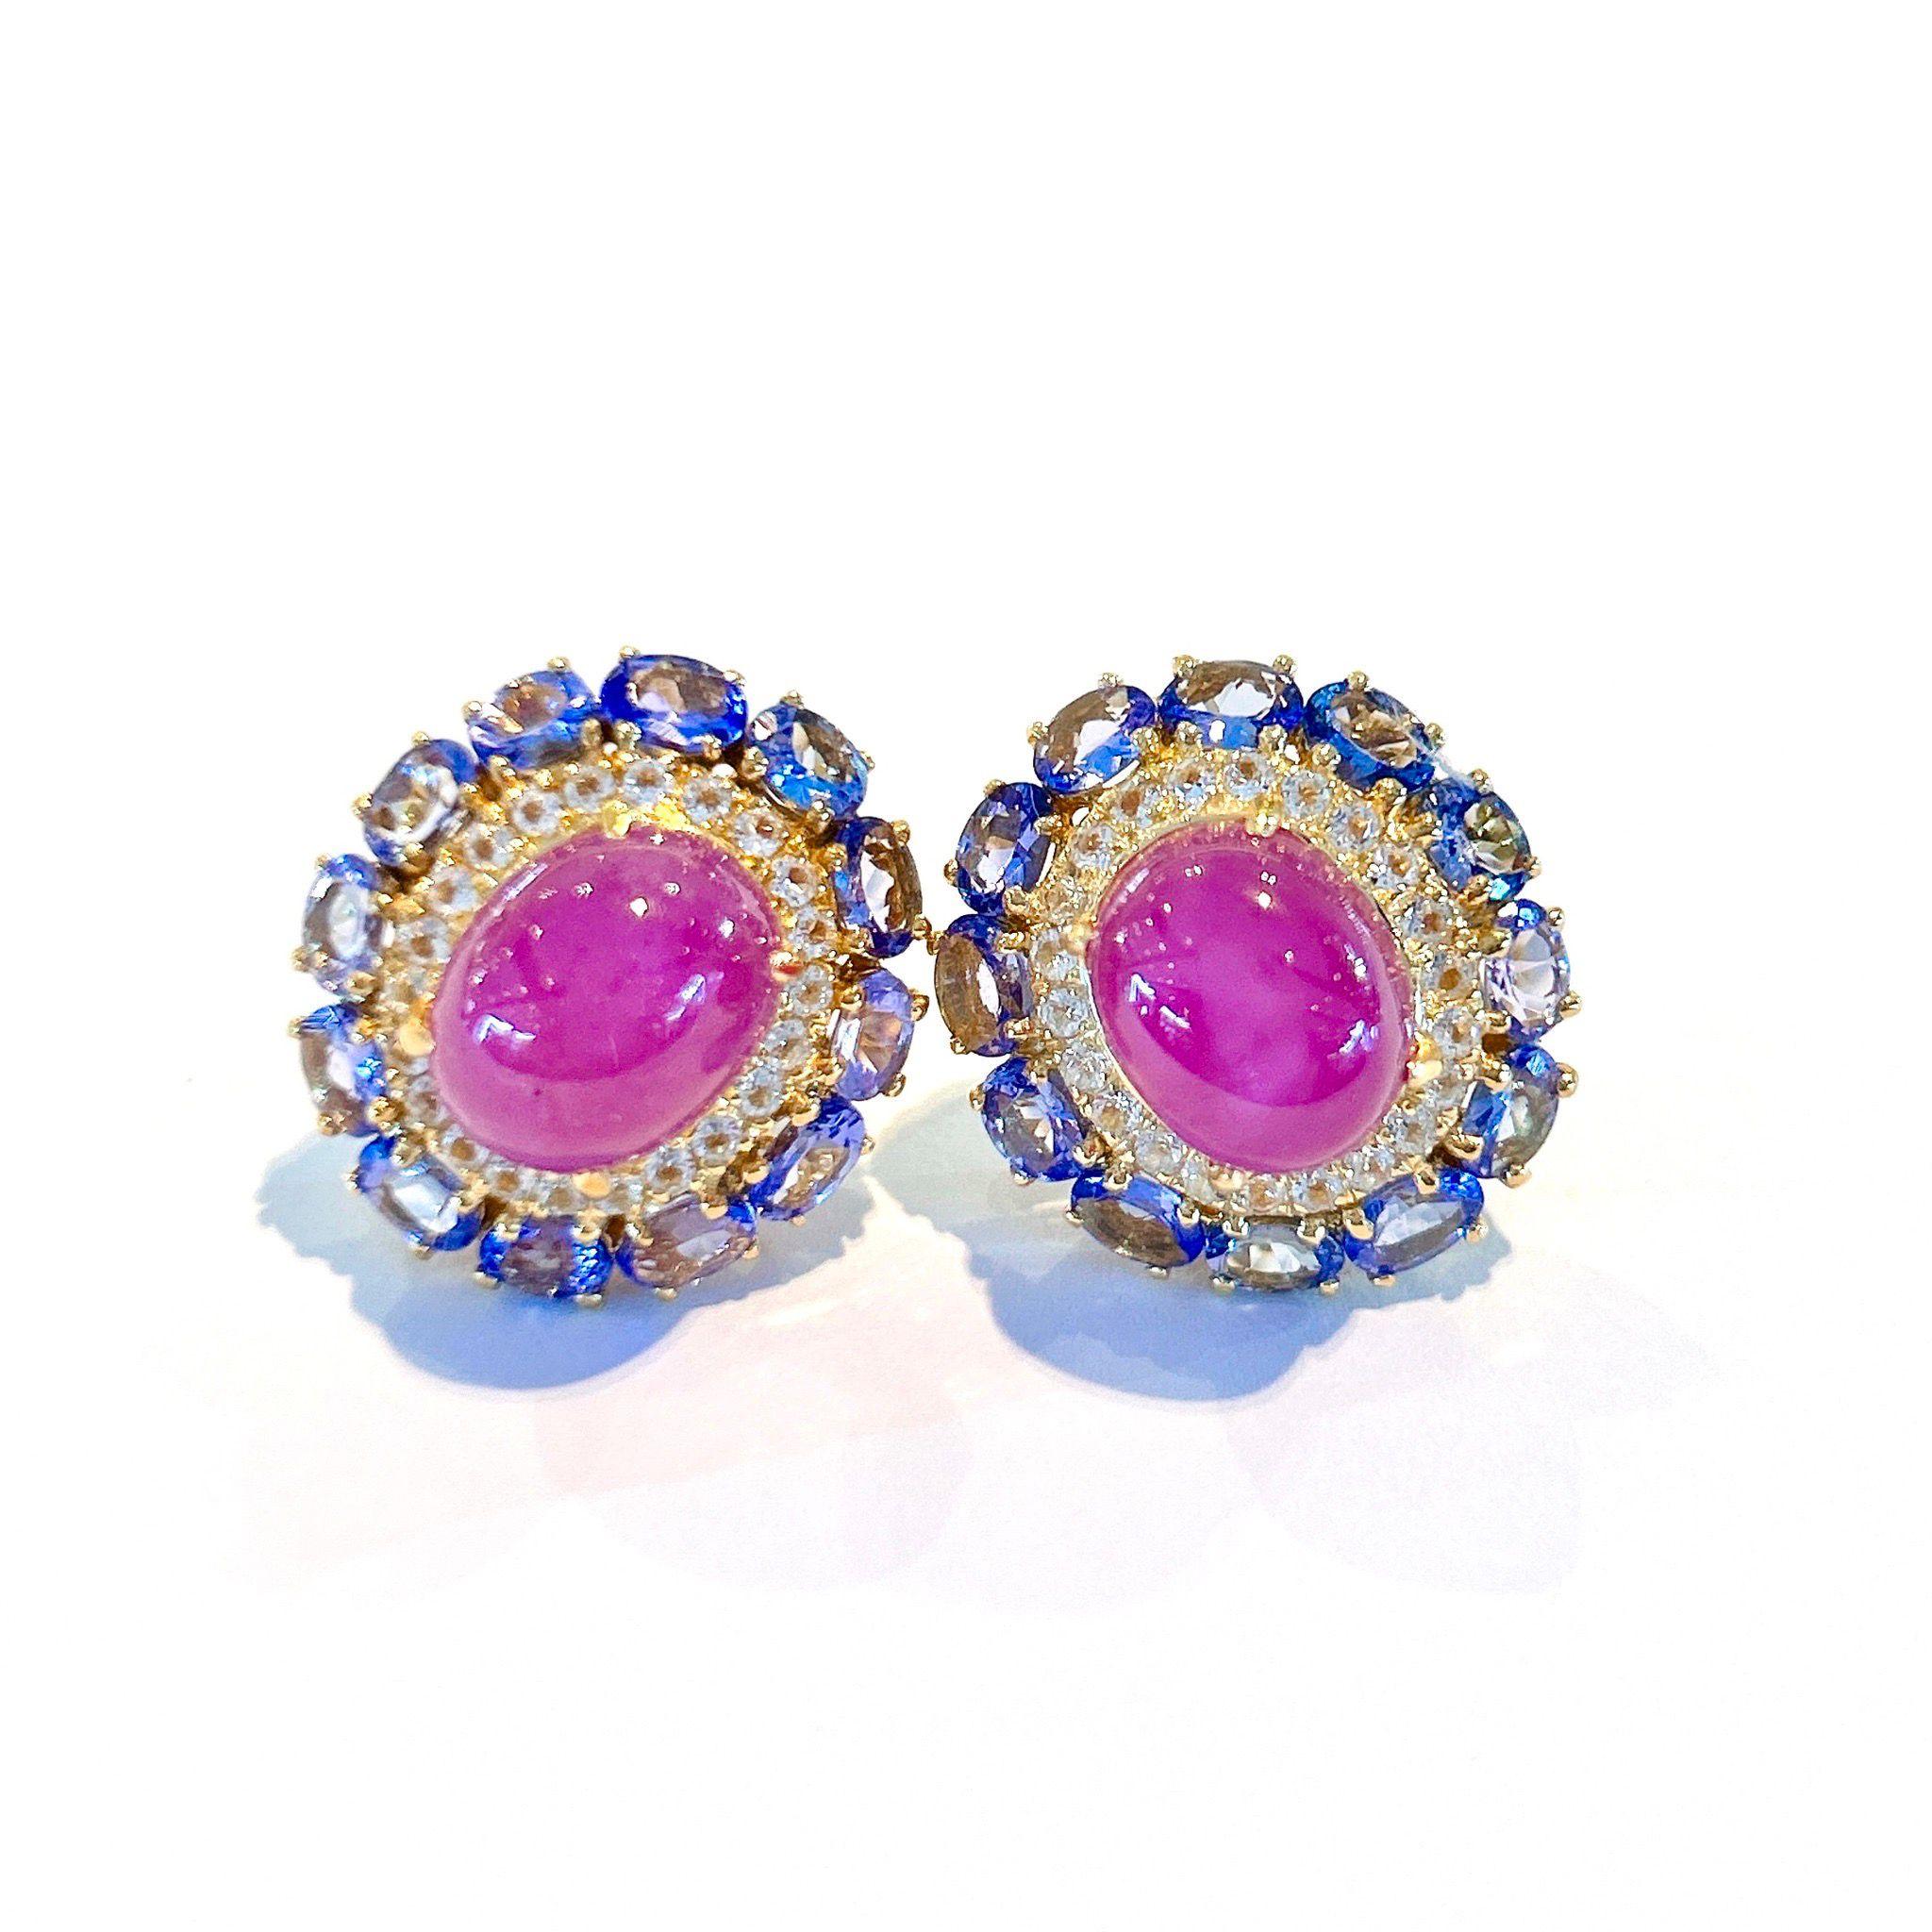 Cabochon Bochic “Capri” Earrings & Cocktail Ring, Multi Gems Set in 22k Gold & Silver